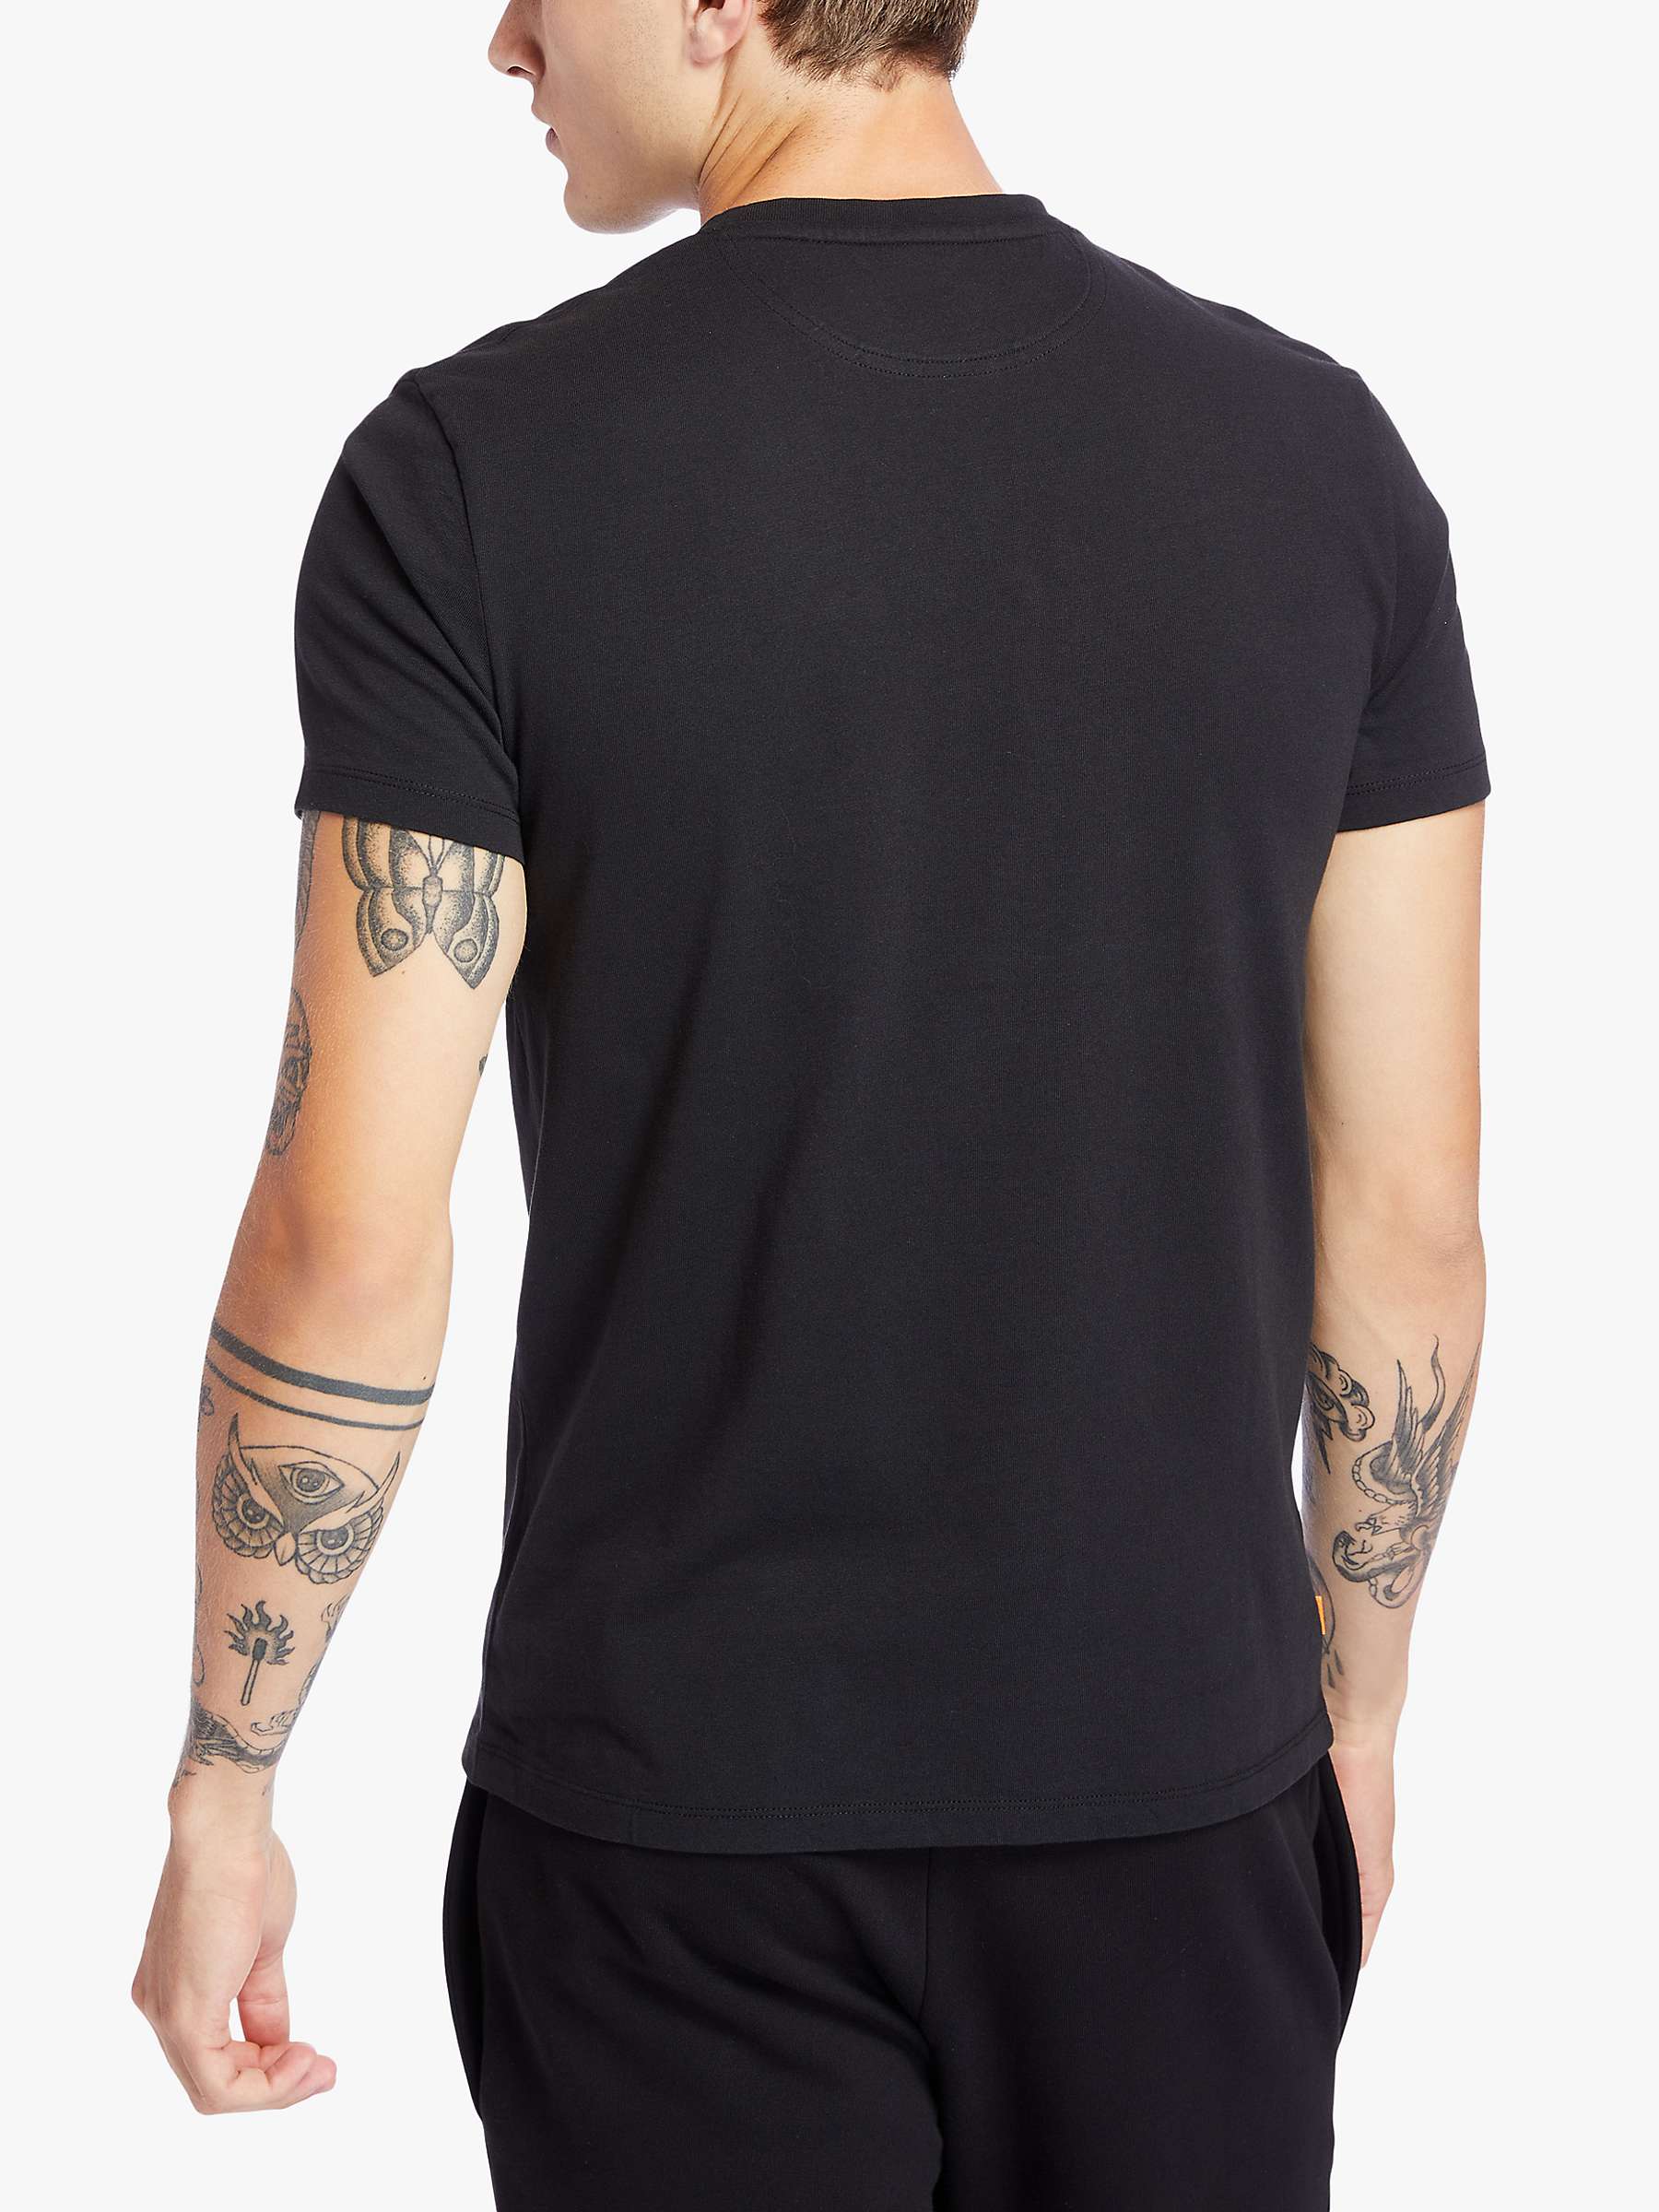 Buy Timberland Dunstan River Short Sleeve T-Shirt, Black Online at johnlewis.com